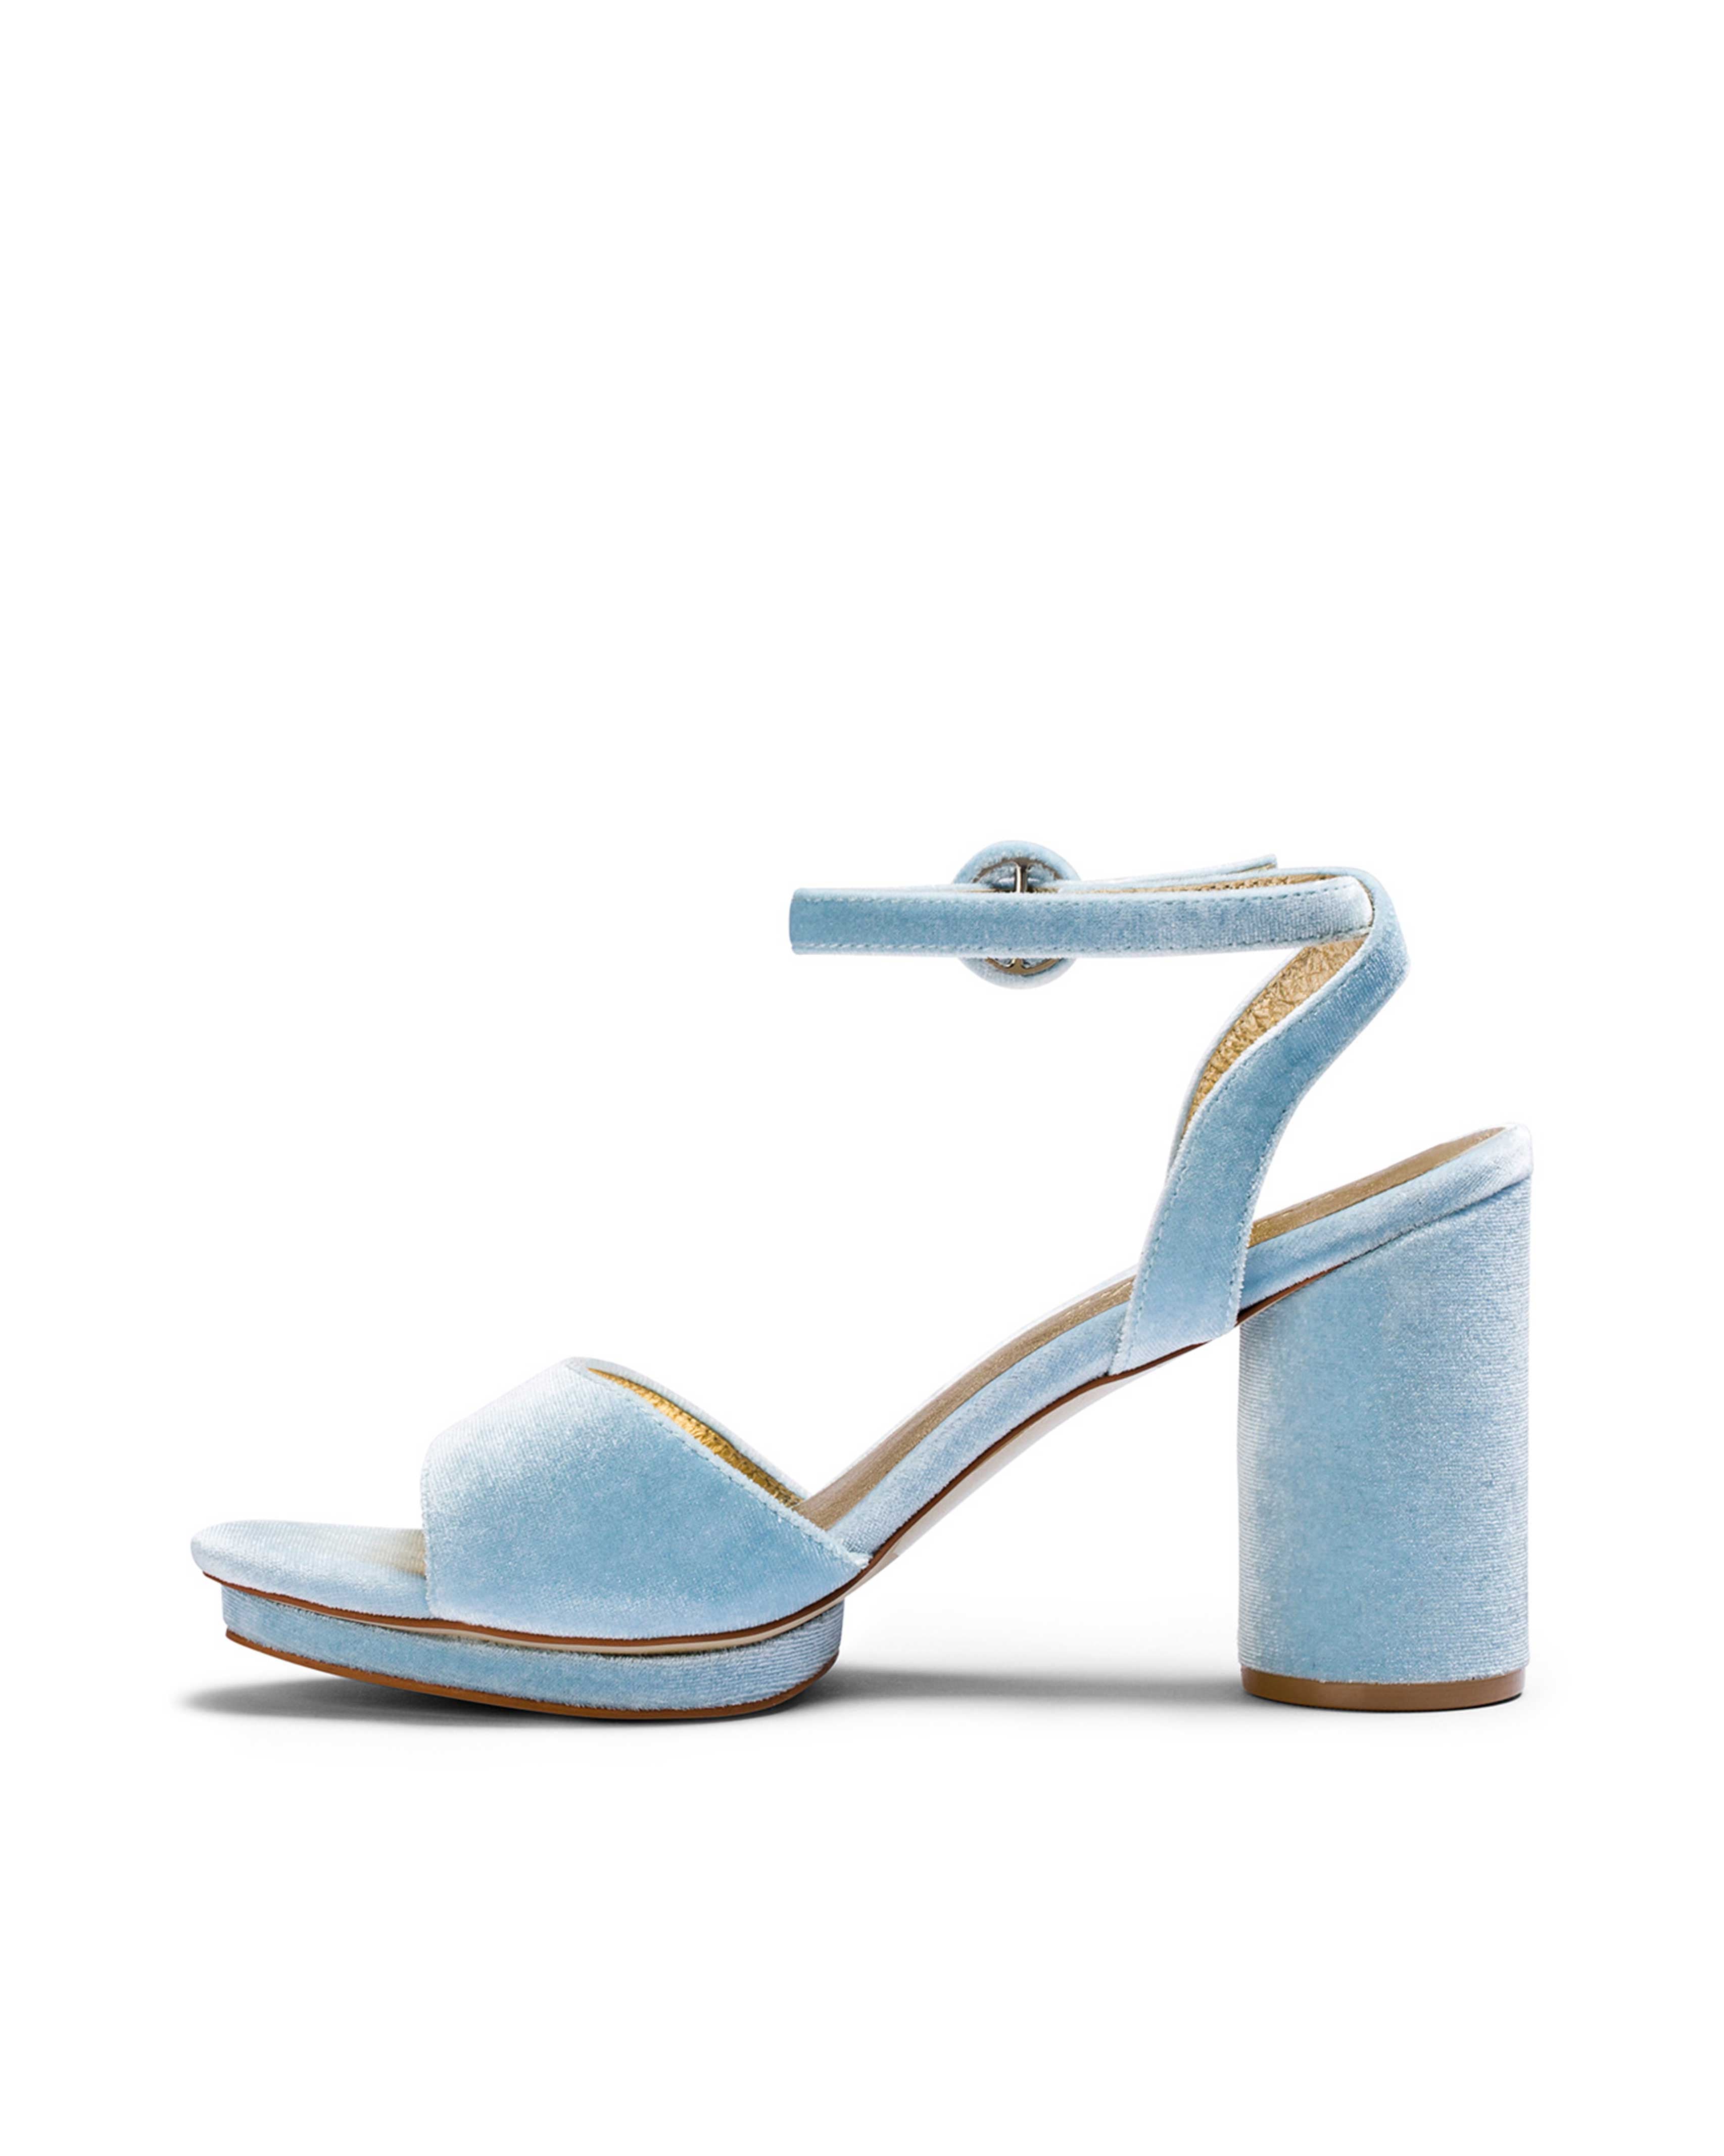 Blue velvet bridal shoes with platform and peep toe